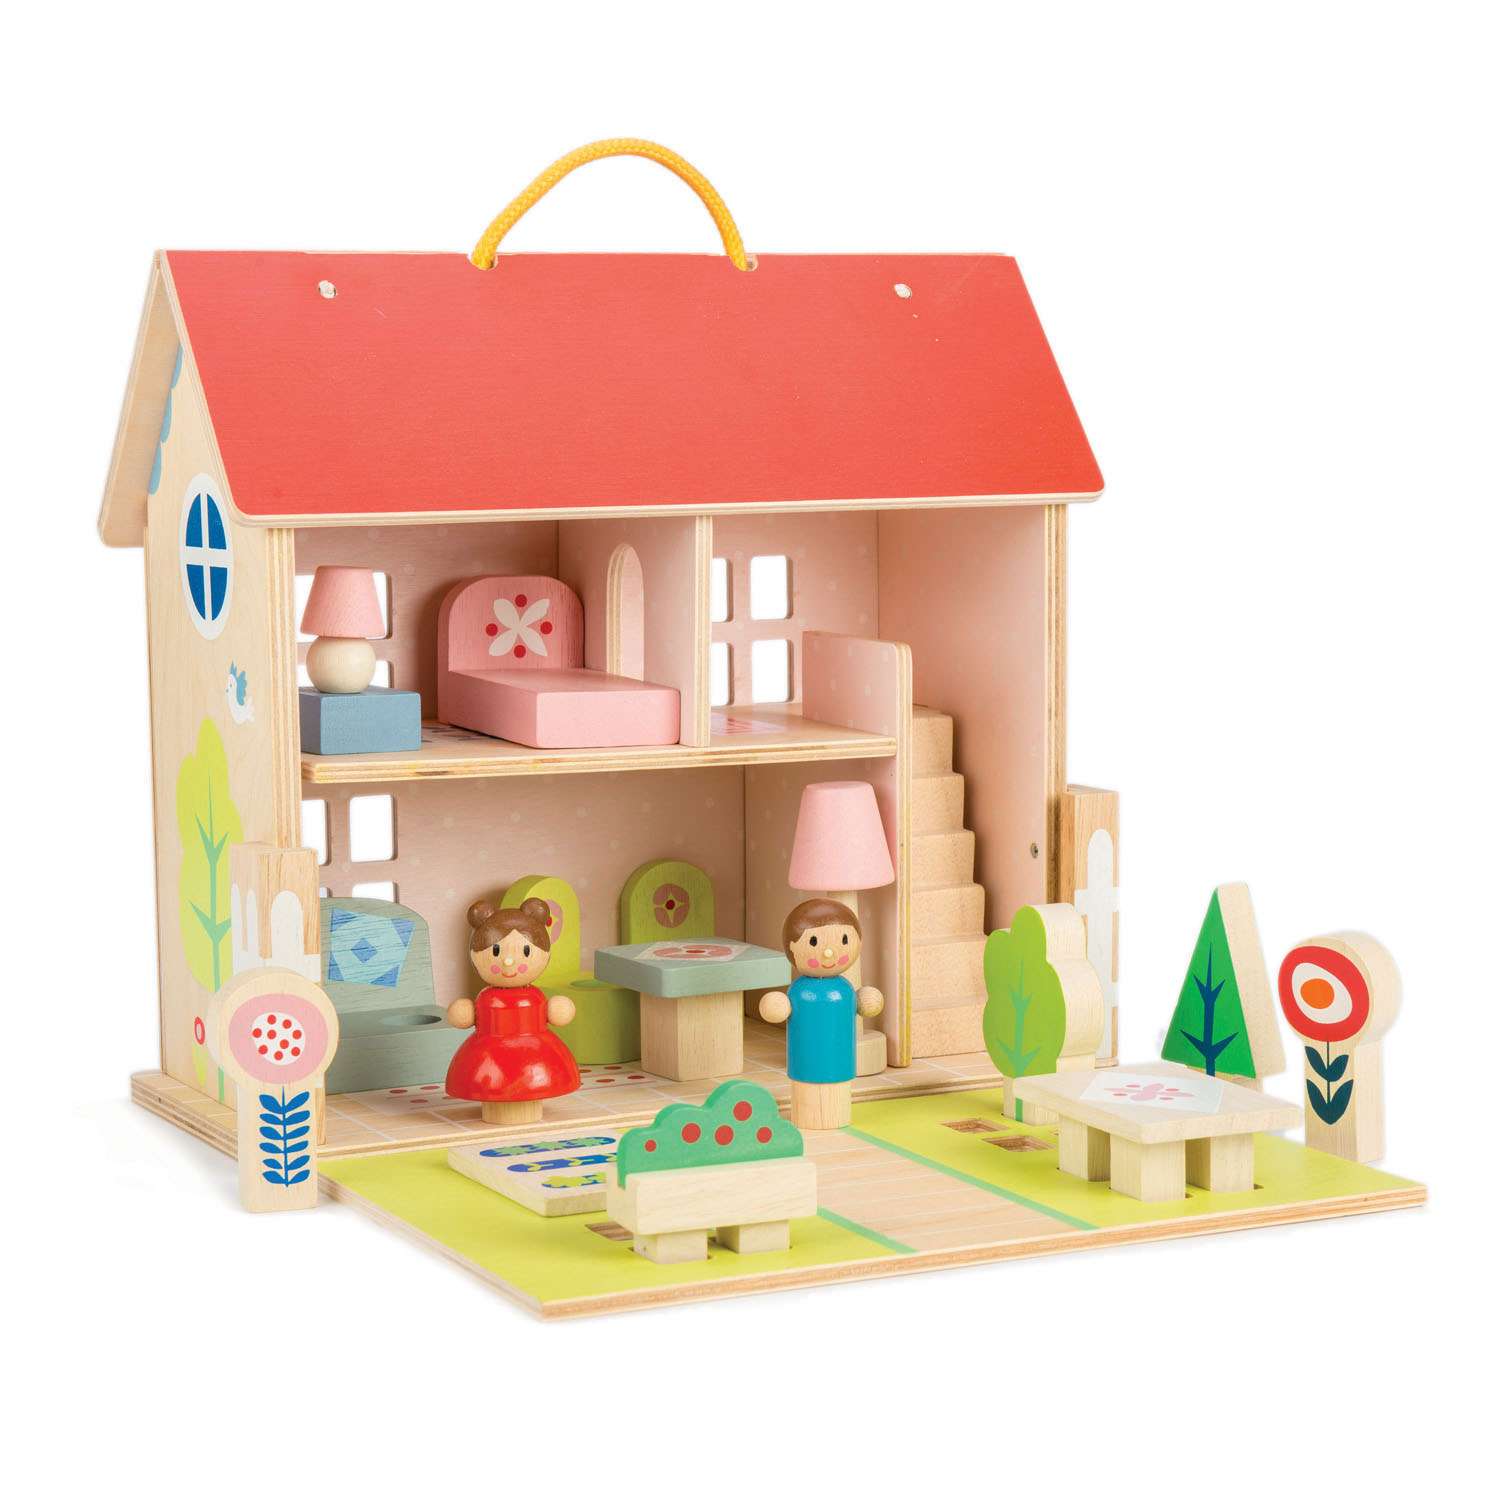 Tender Leaf Toys ของเล่นไม้ บ้านตุ๊กตา บ้านตุ๊กตาแบบพกพา Dolls House Set